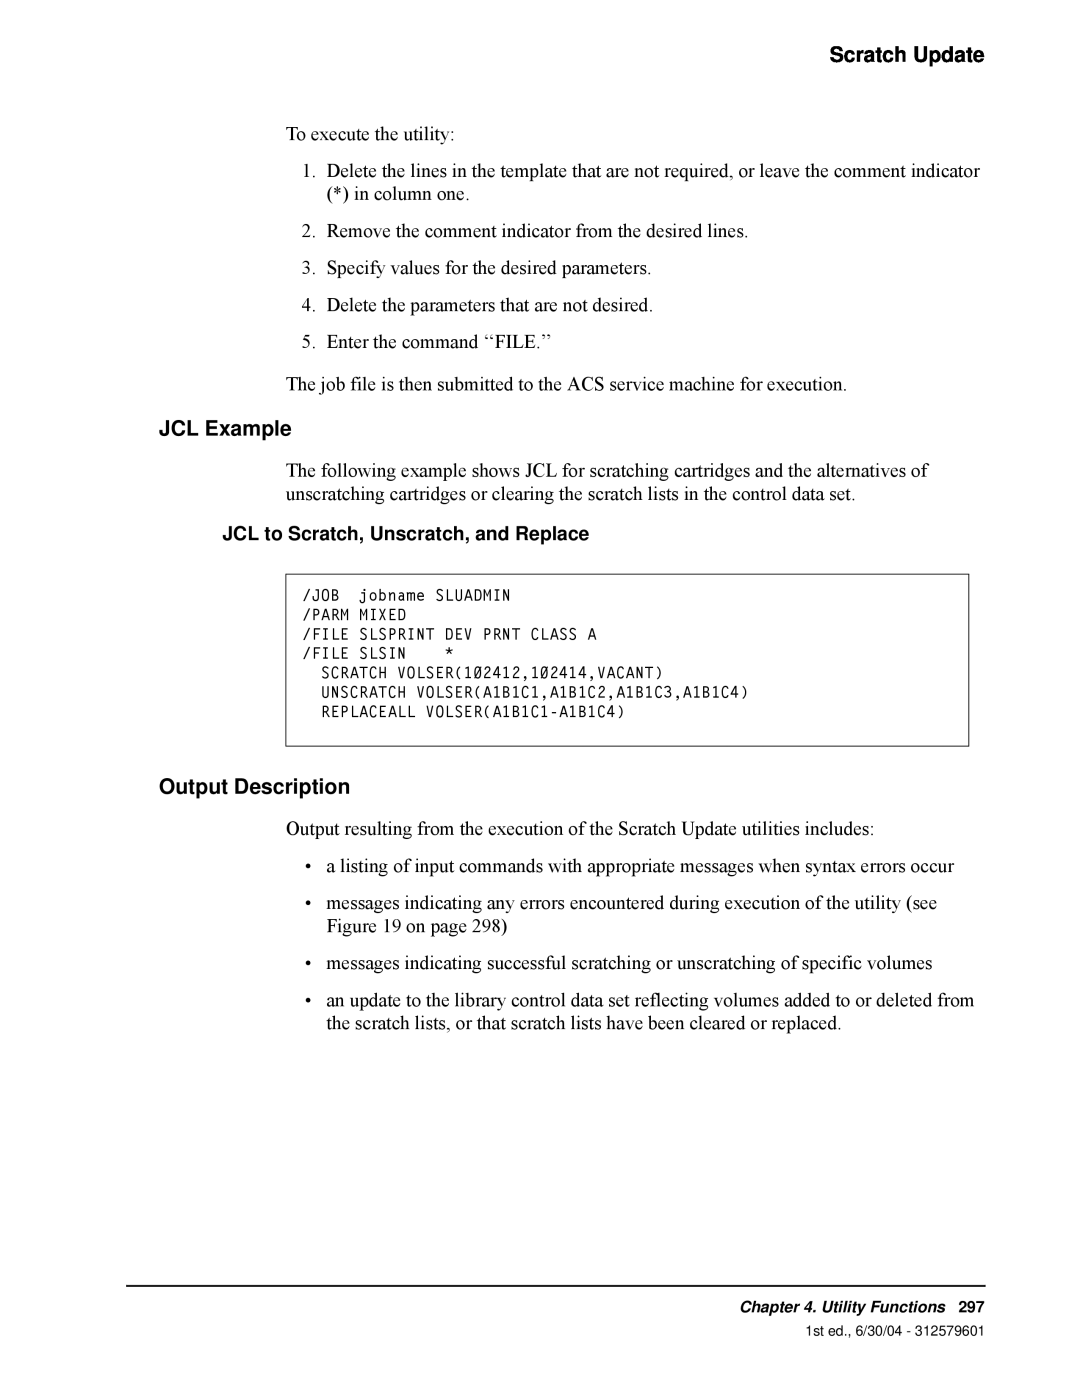 StorageTek 6 manual JCL to Scratch, Unscratch, and Replace, Scratch Update, JCL Example, Output Description 